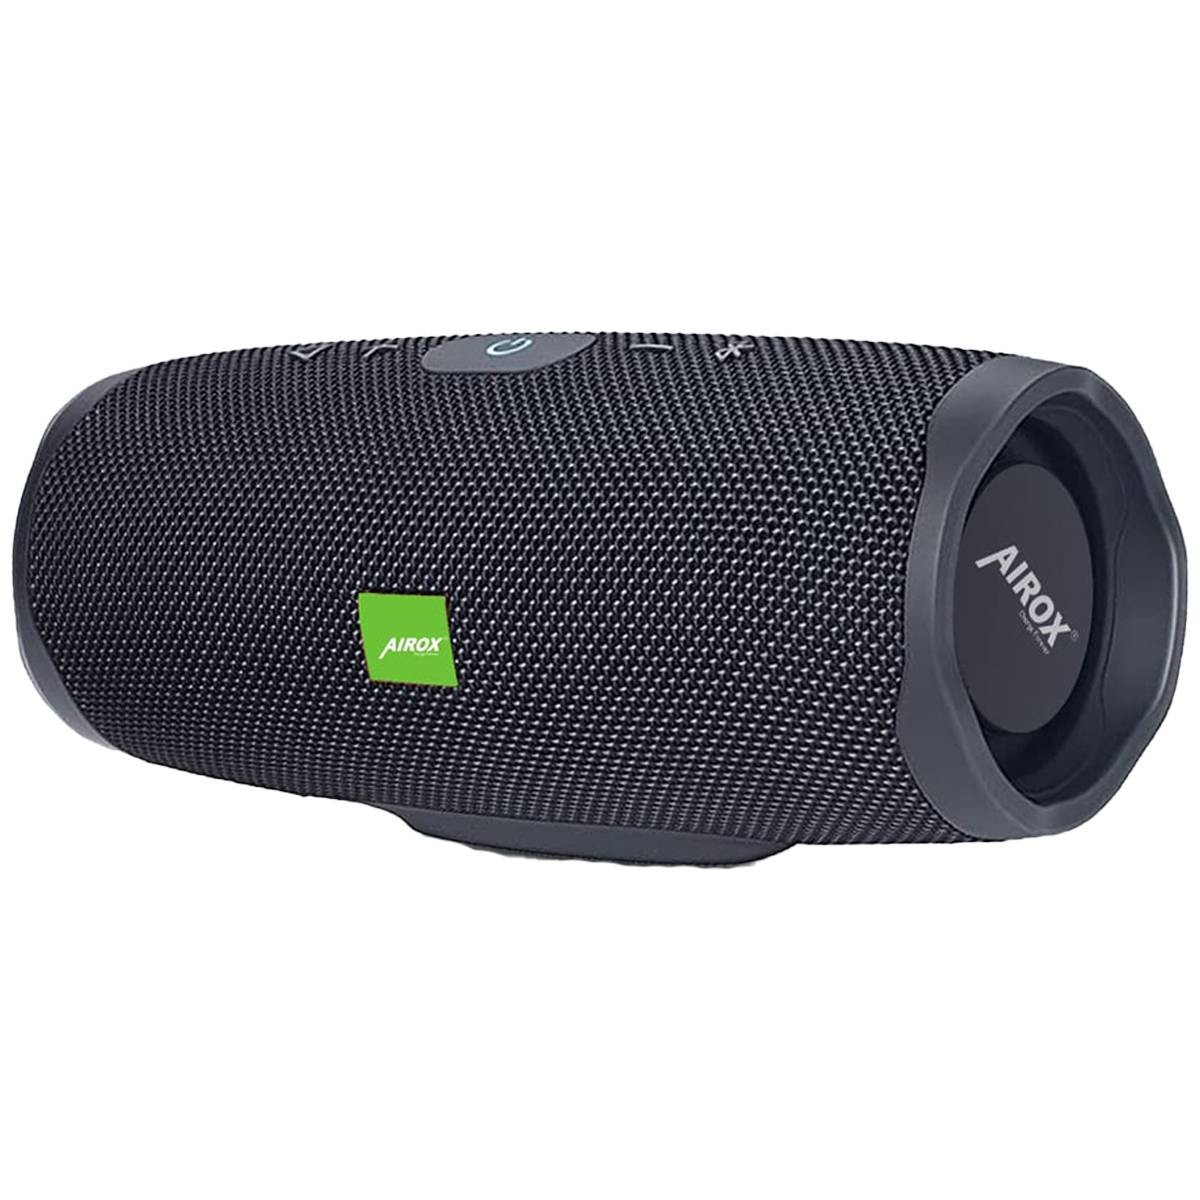 Airox Wireless Bluetooth Mp3 Speaker